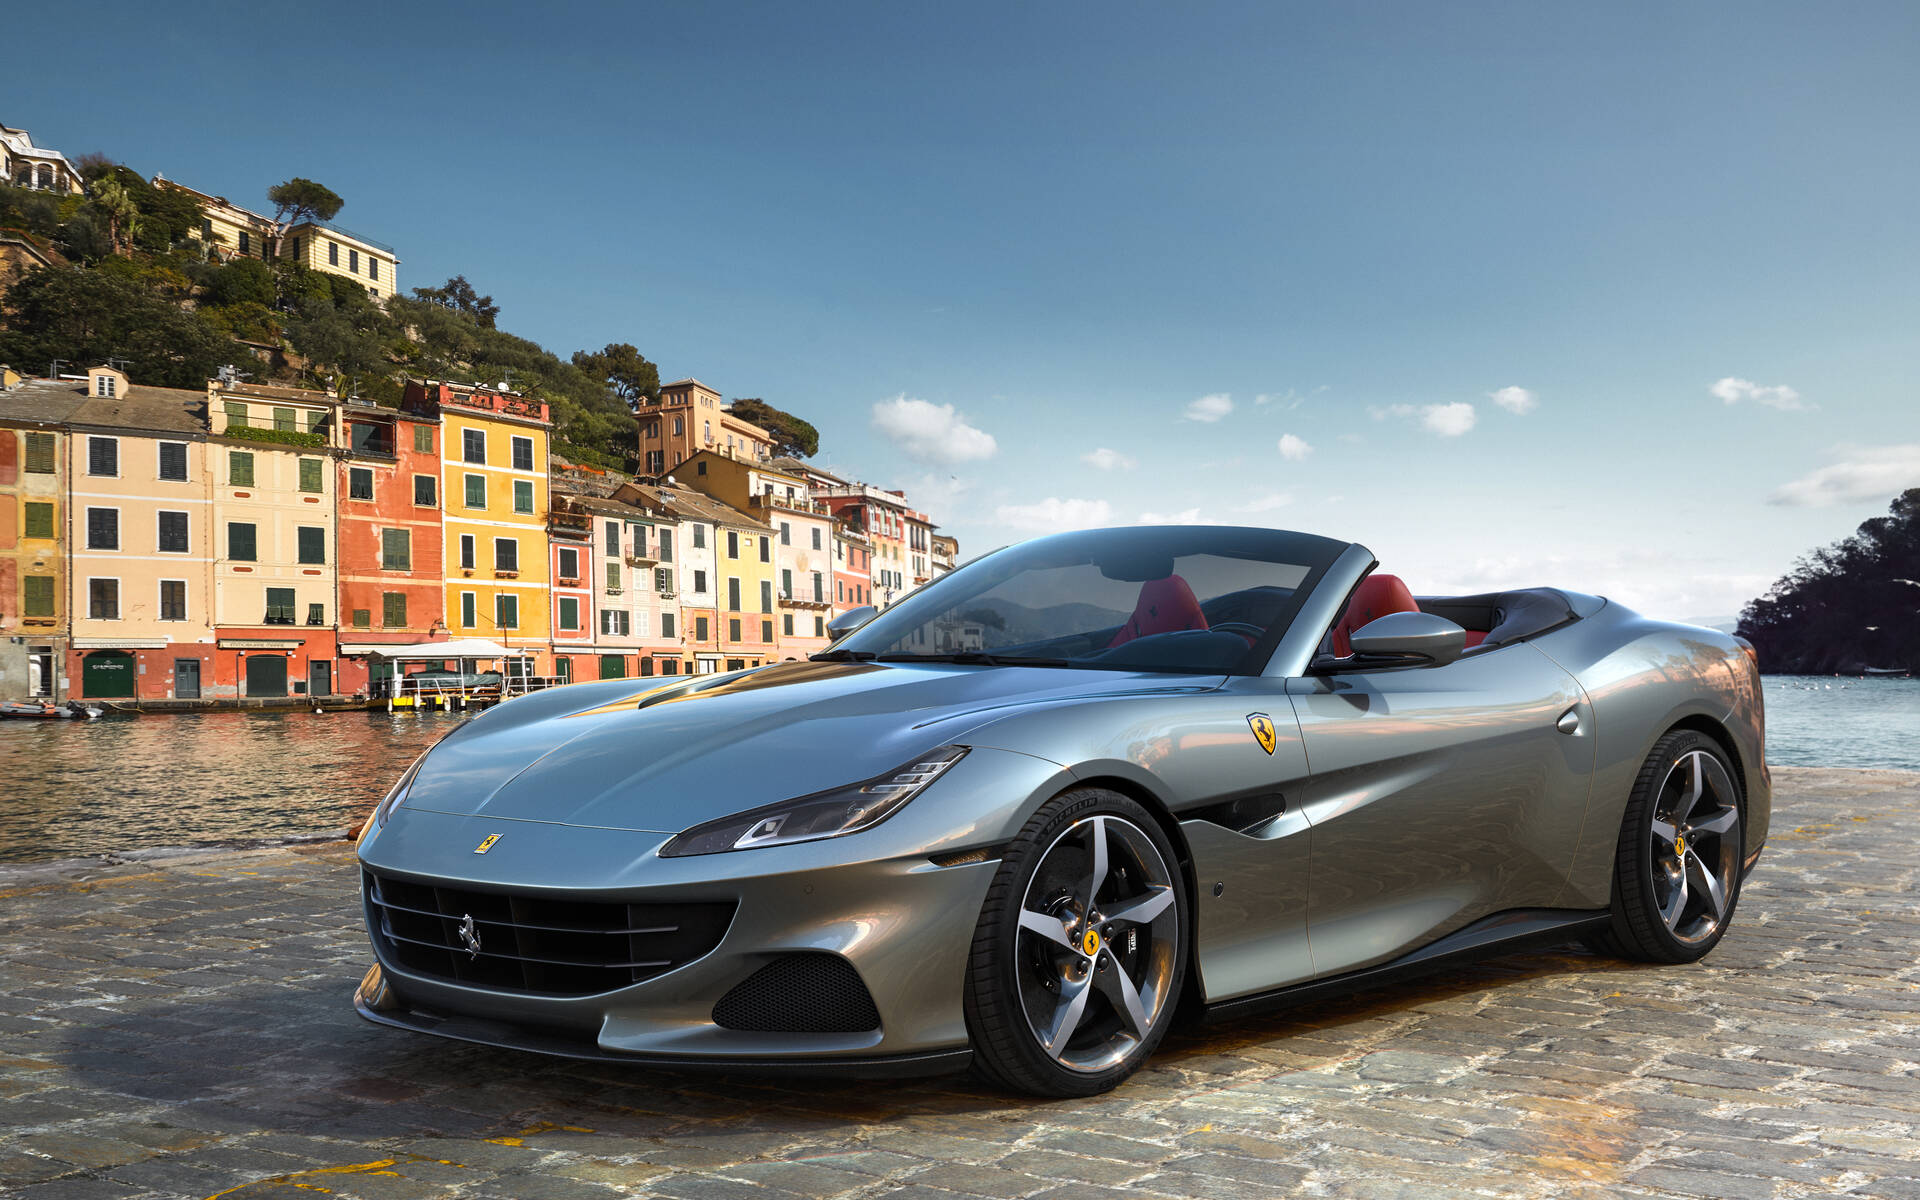 2023 Ferrari Portofino M - News, reviews, picture galleries and videos -  The Car Guide